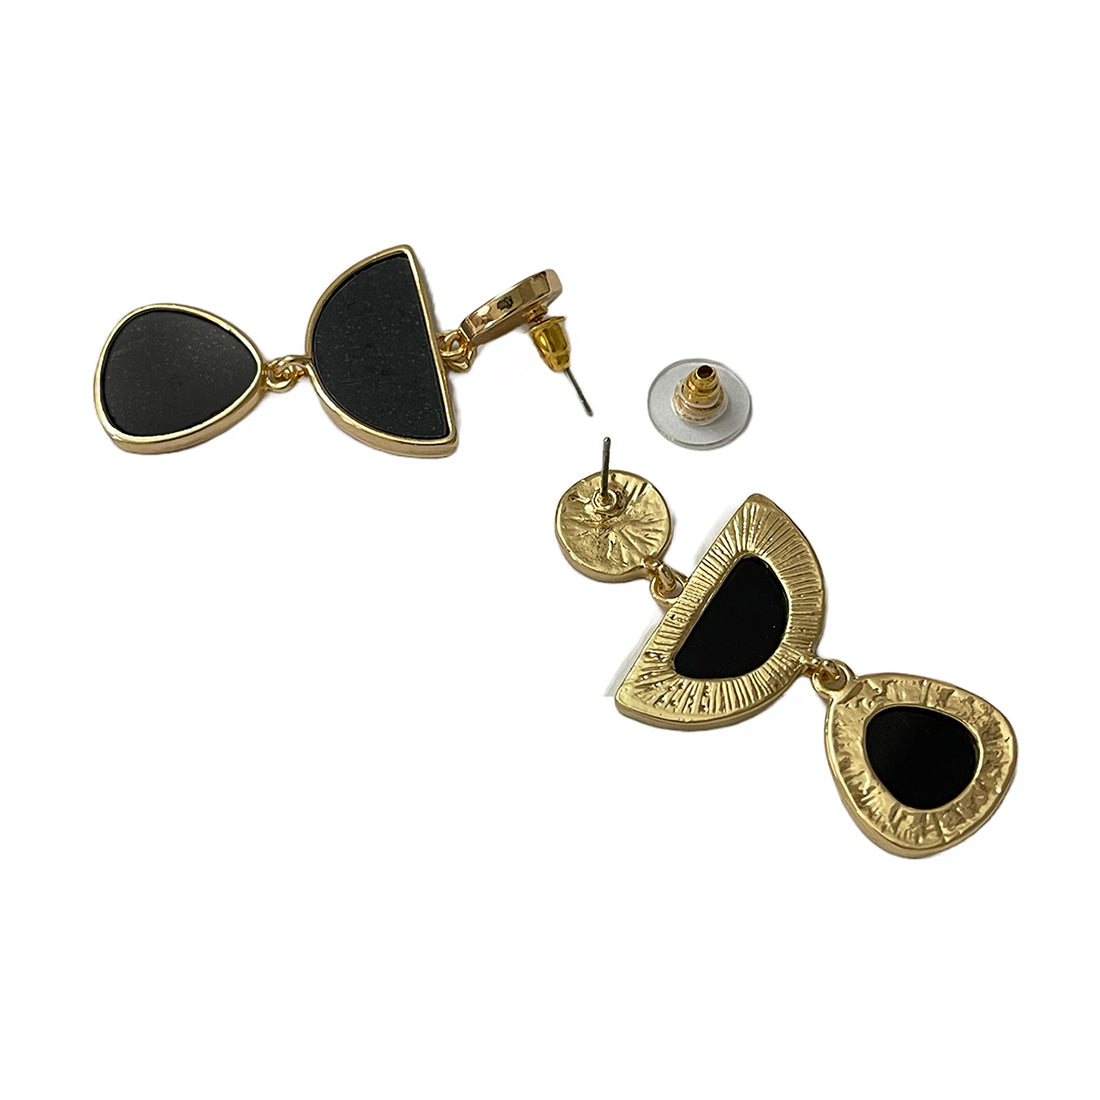 Organic Black Acrylic Gold-Toned Triple Drop Earrings